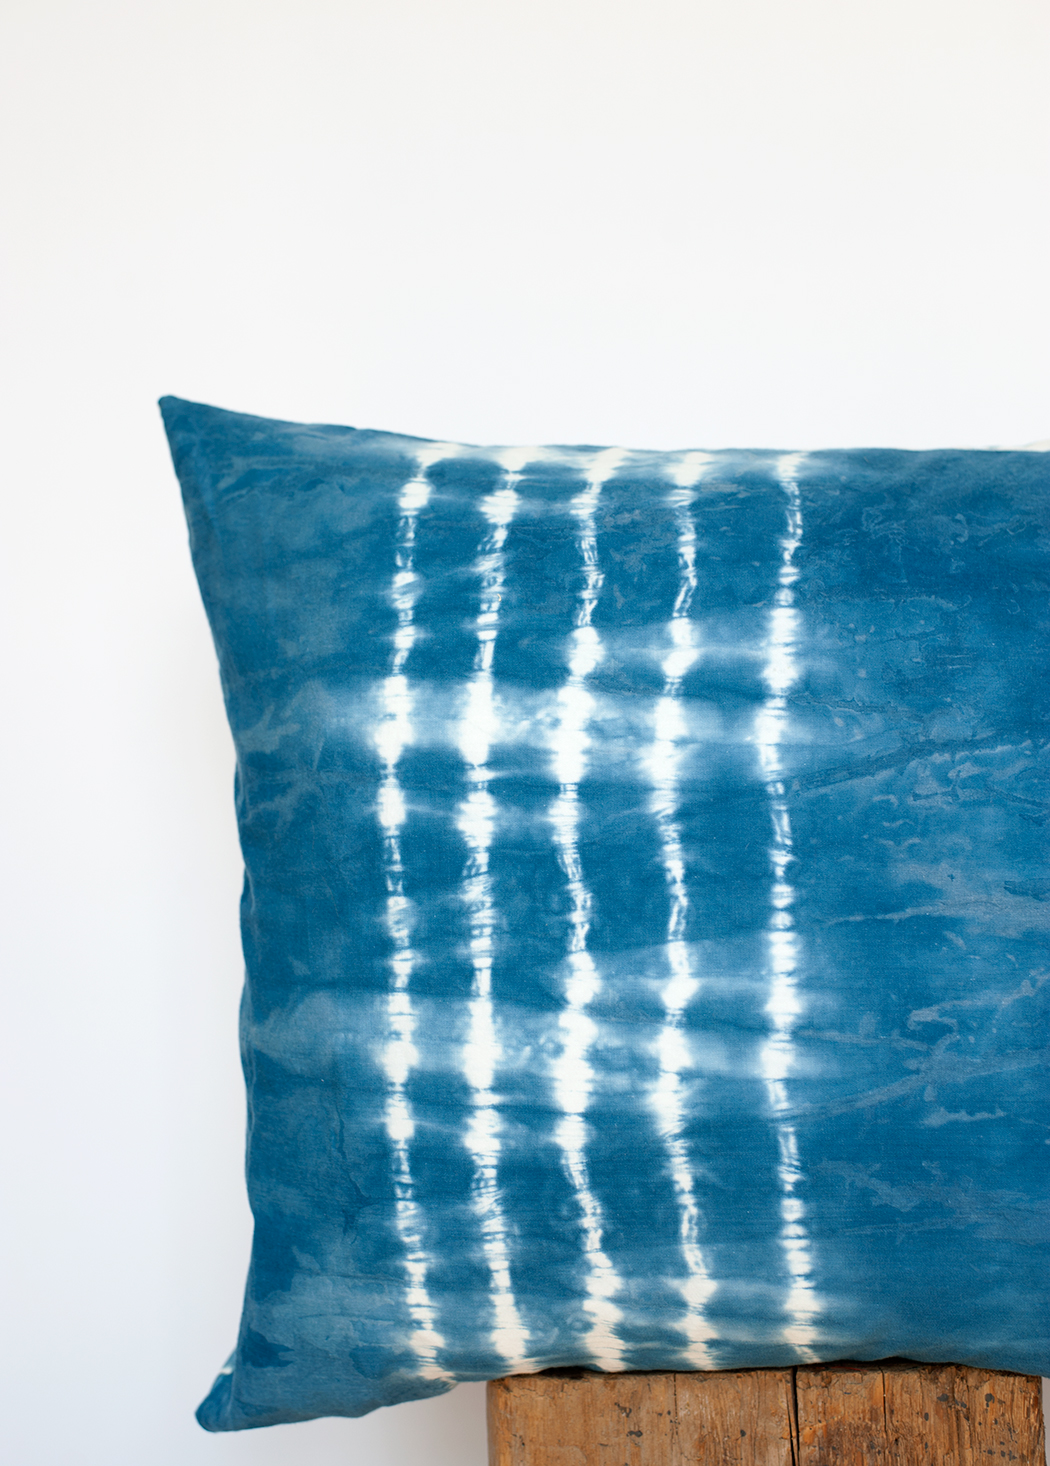 Shibori Indigo Dye Series – Pillows